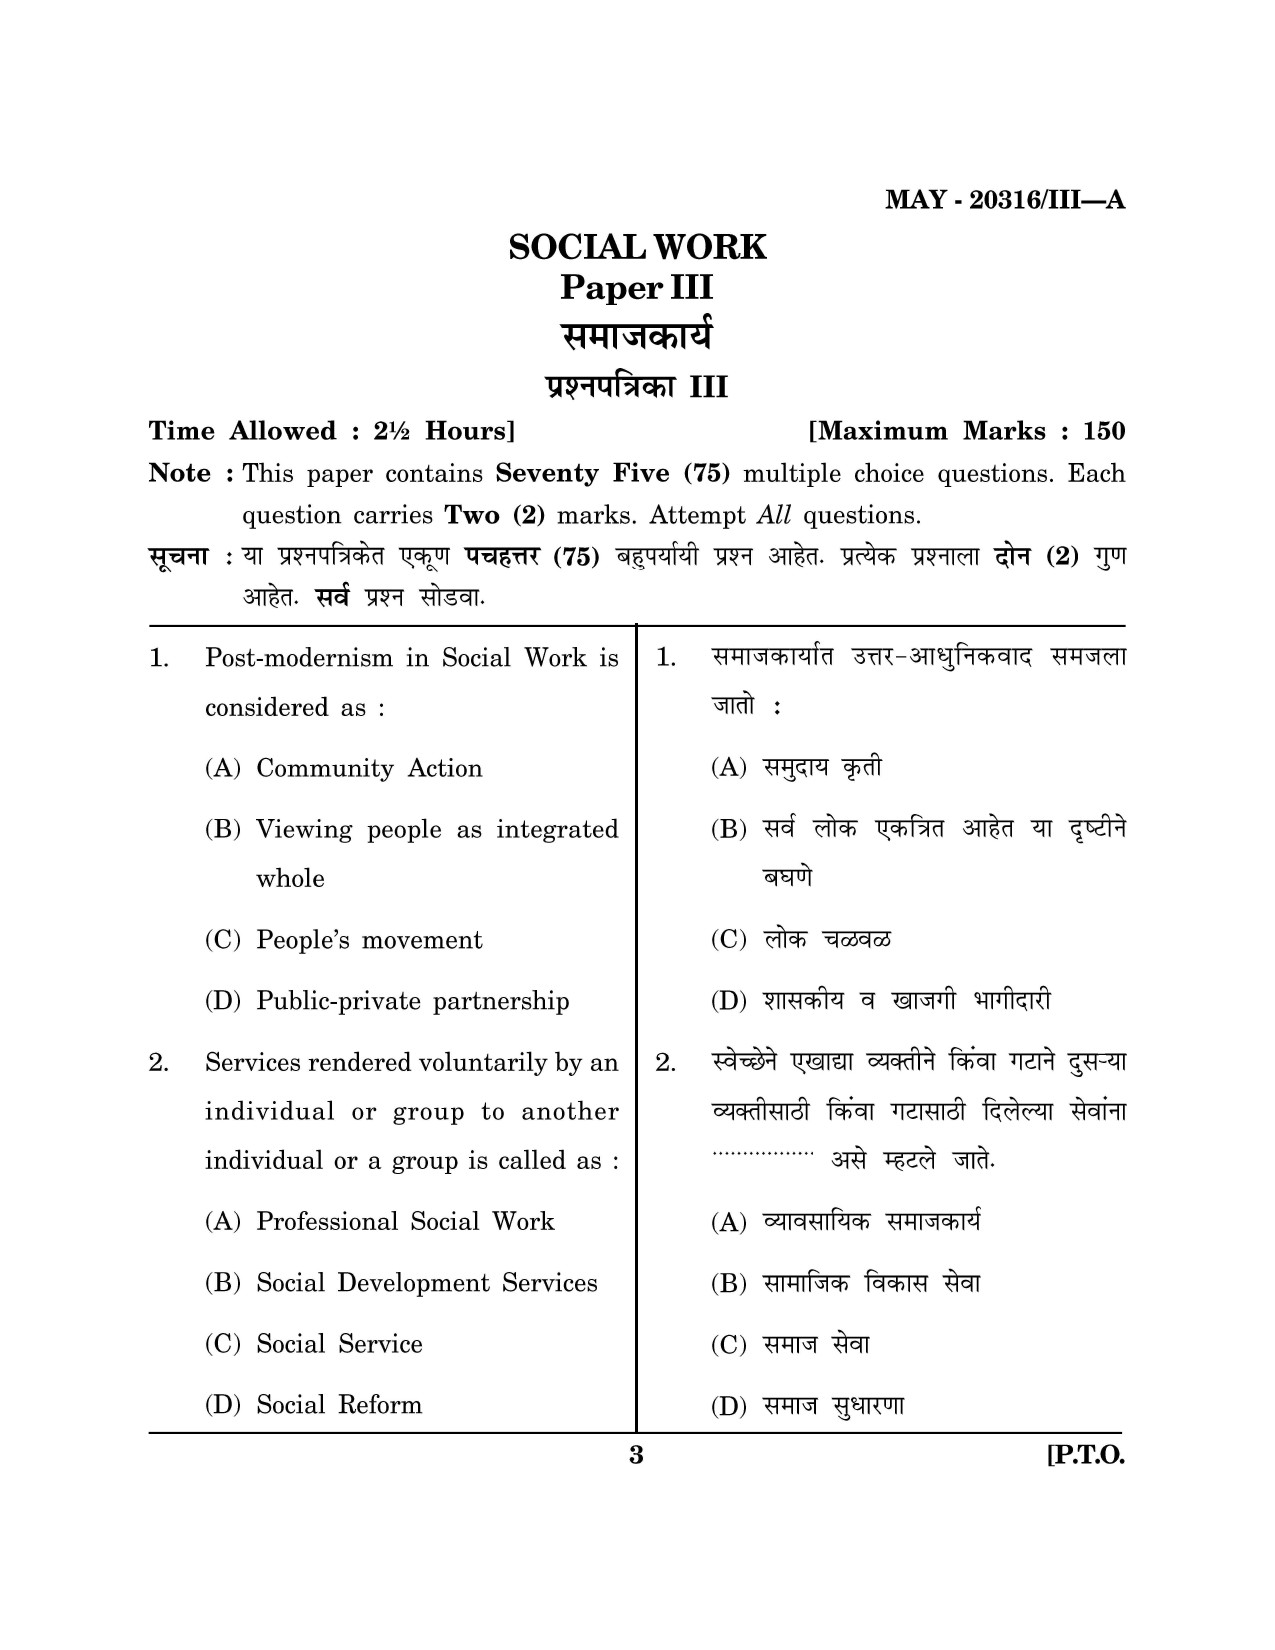 Maharashtra SET Social Work Question Paper III May 2016 2